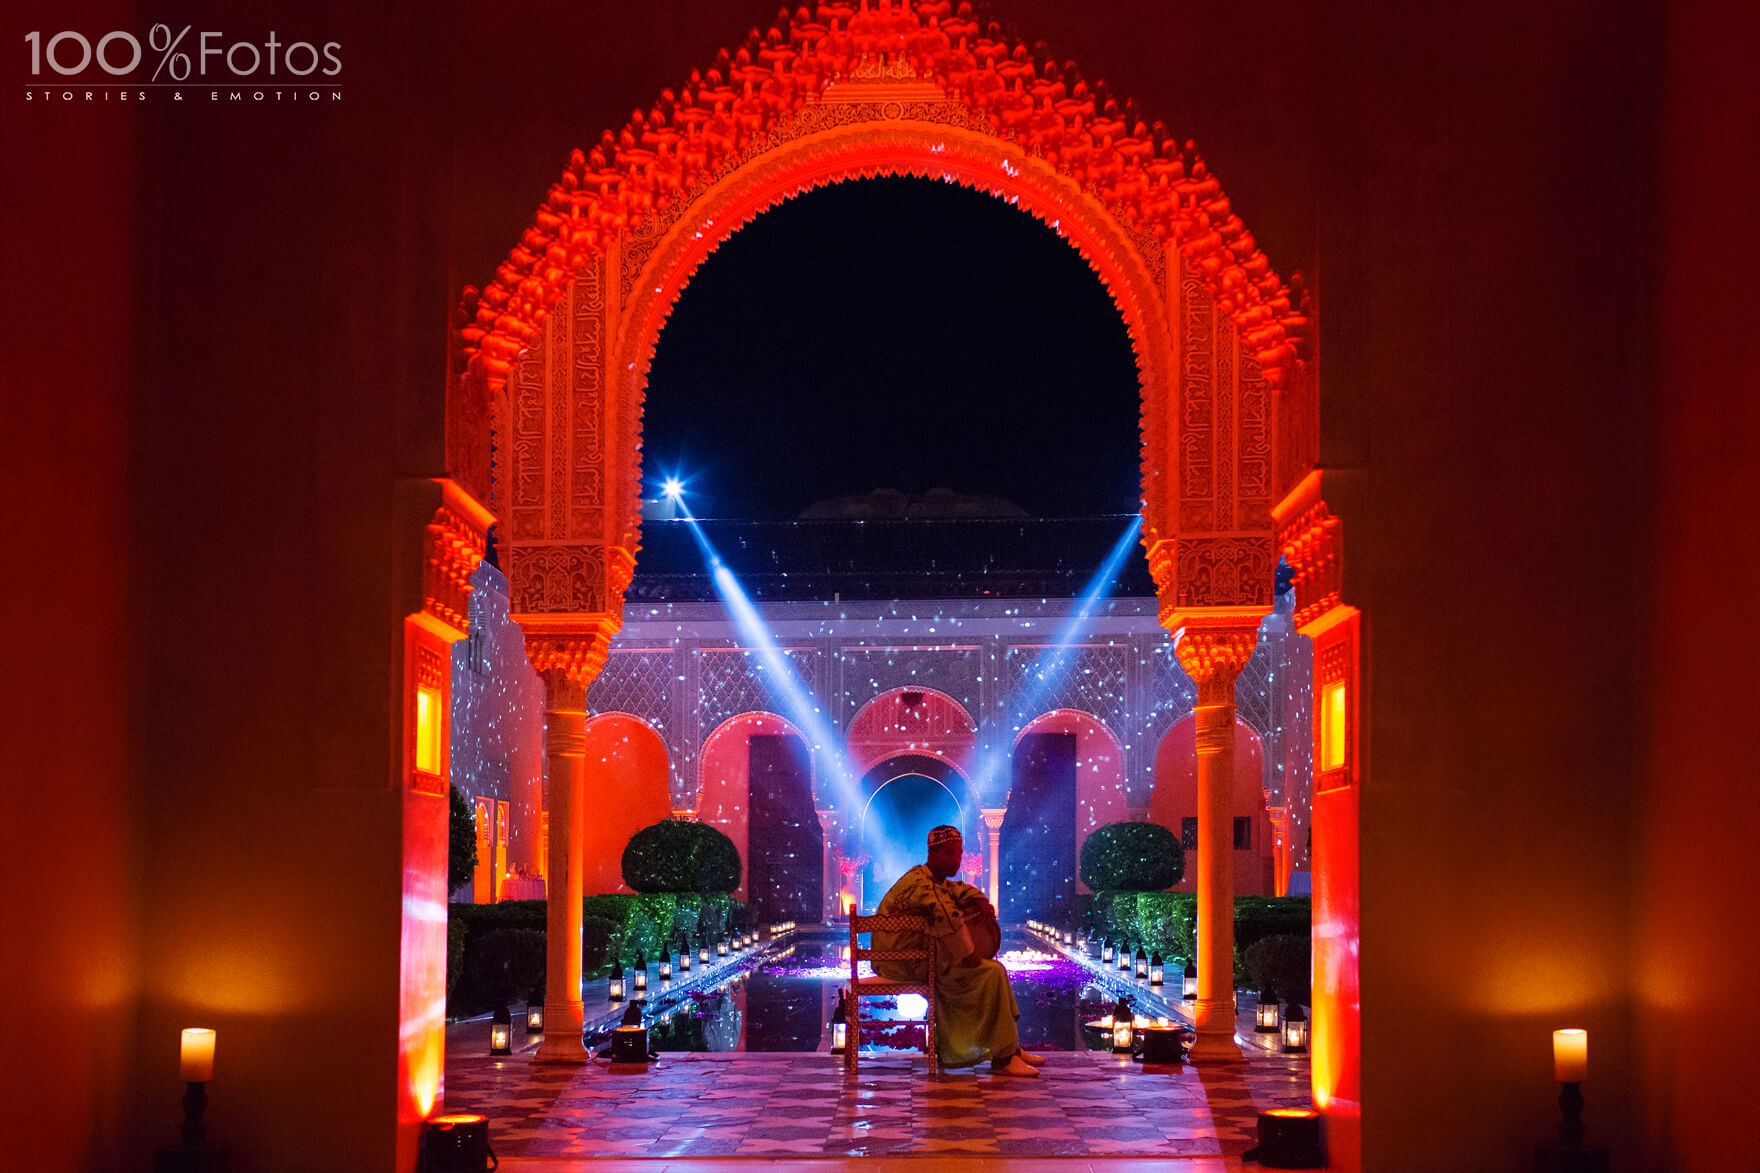 Wedding Photographer Marrakech, Marocco